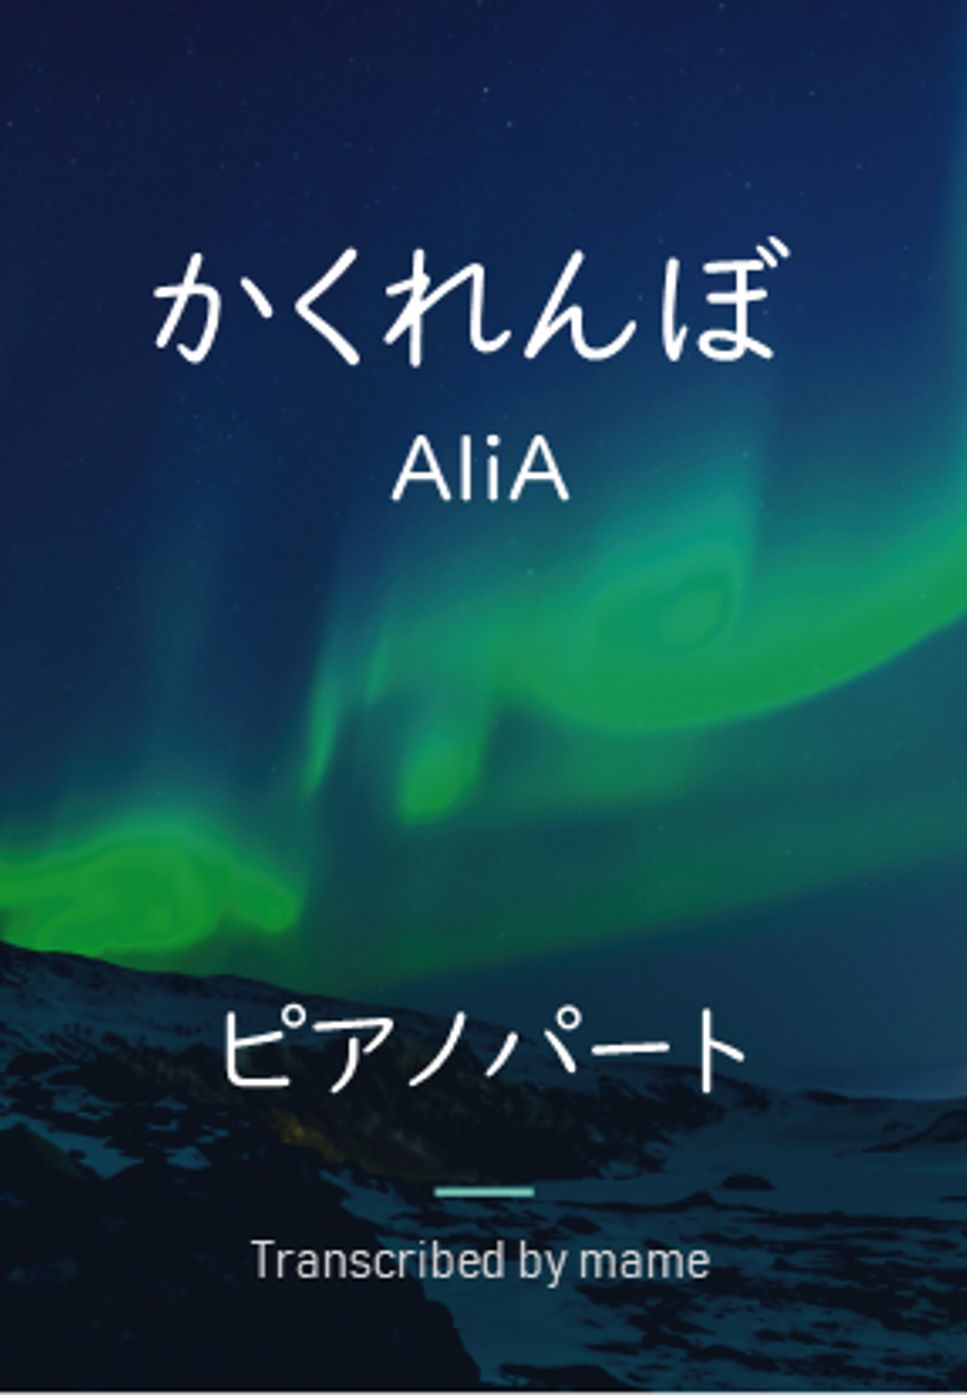 AliA - かくれんぼ (piano part) by mame